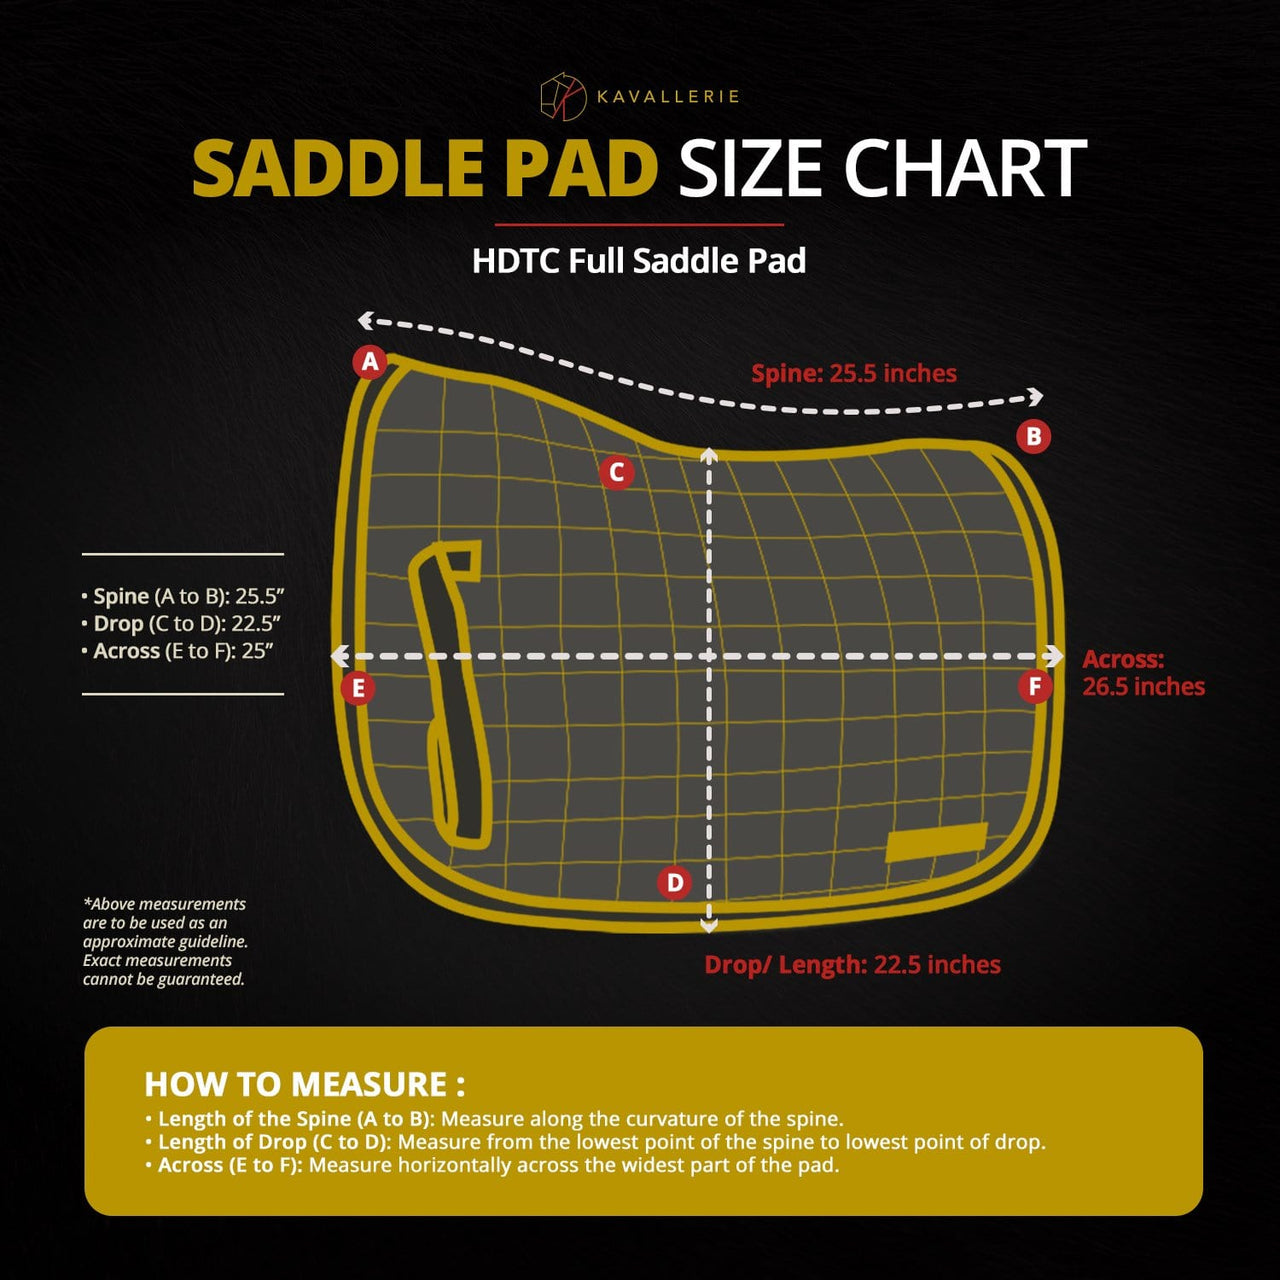 HDTC Full Saddle Pad - Kavallerie